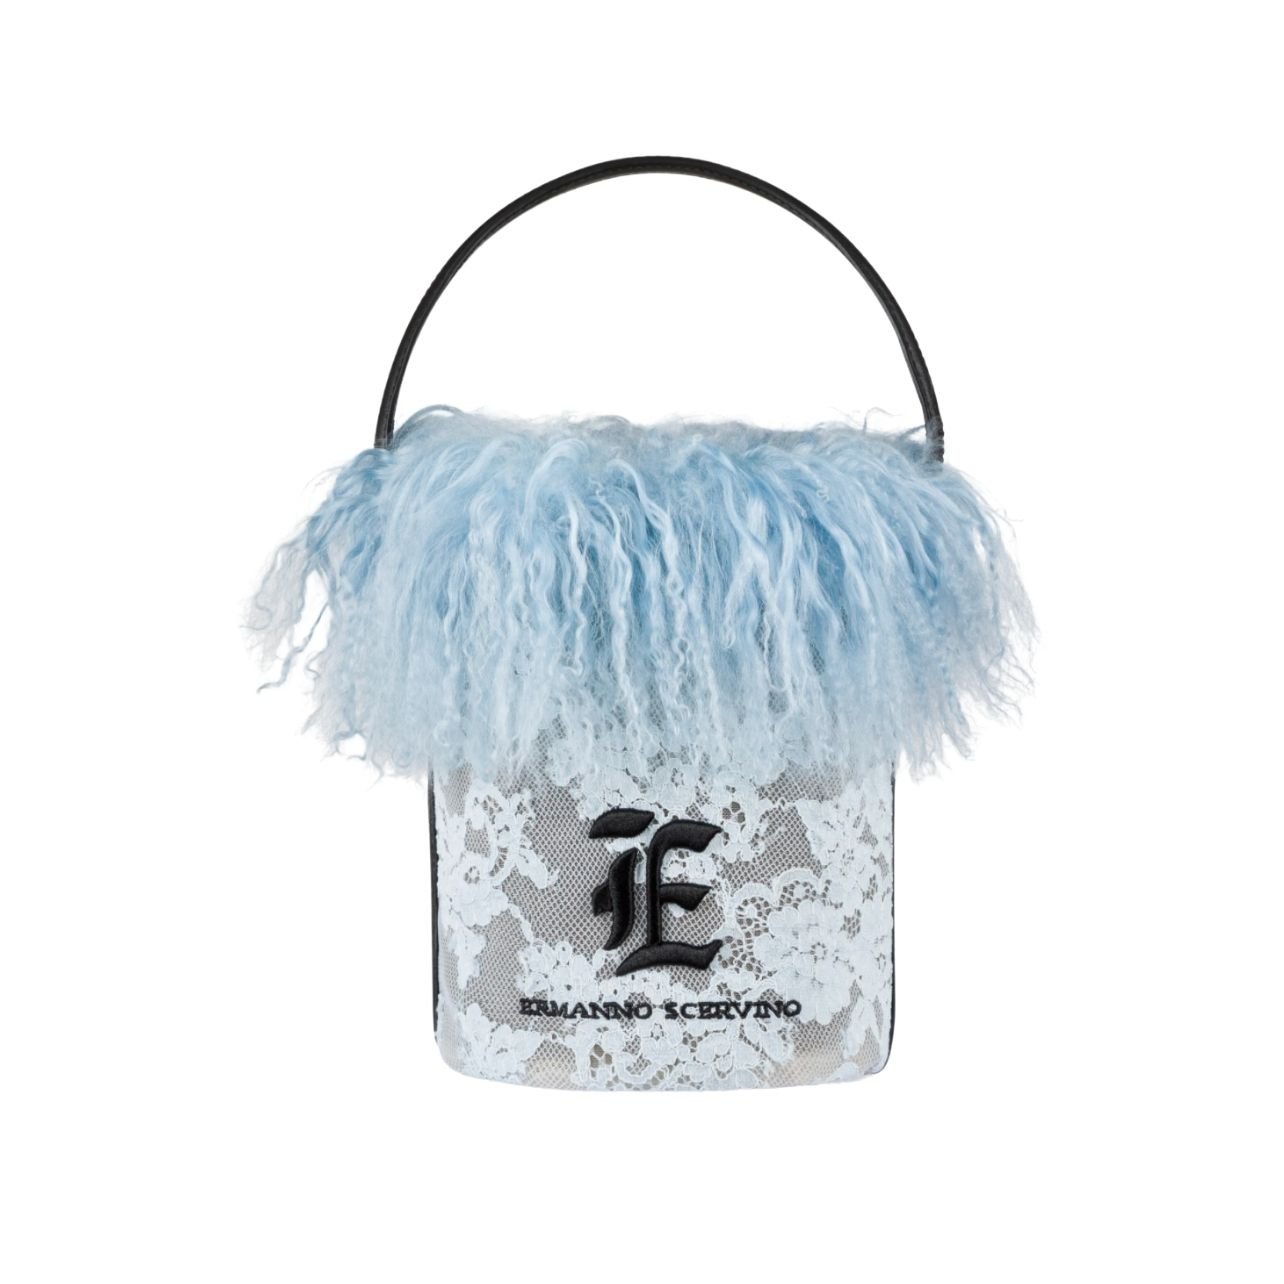 Ermano scervino blue bucket bag with fur detail